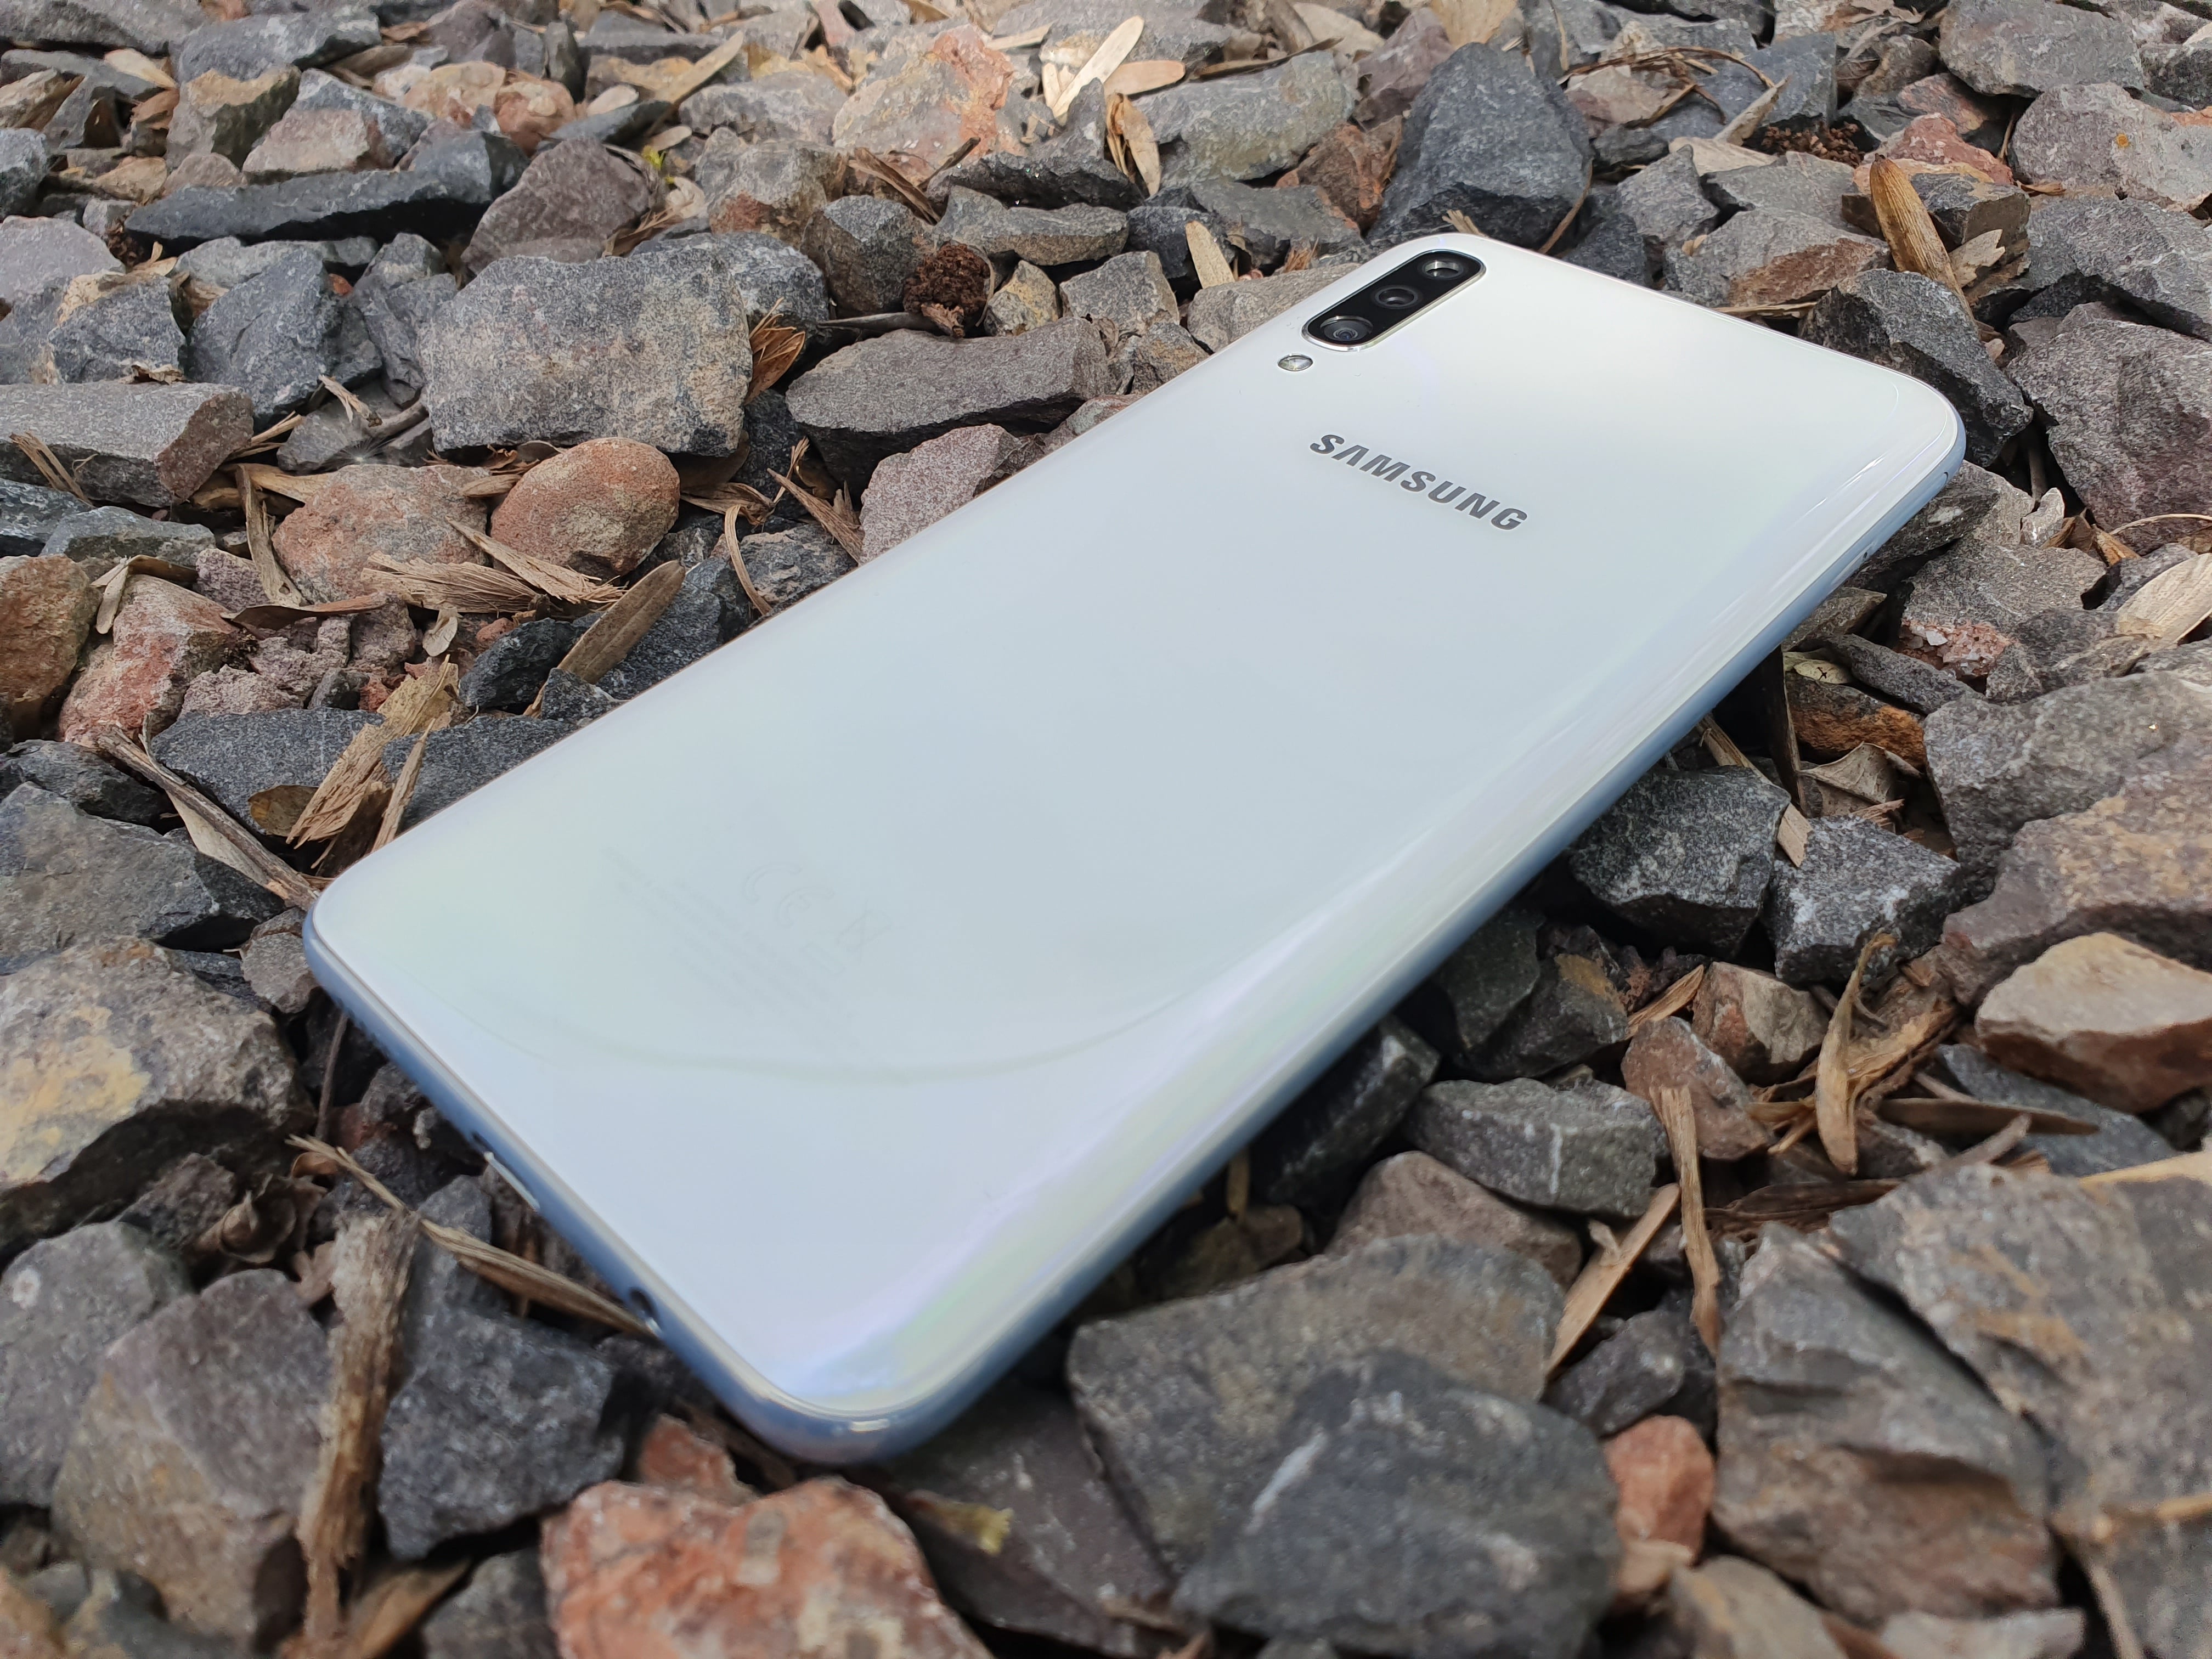 Samsung Galaxy A50 smartphone